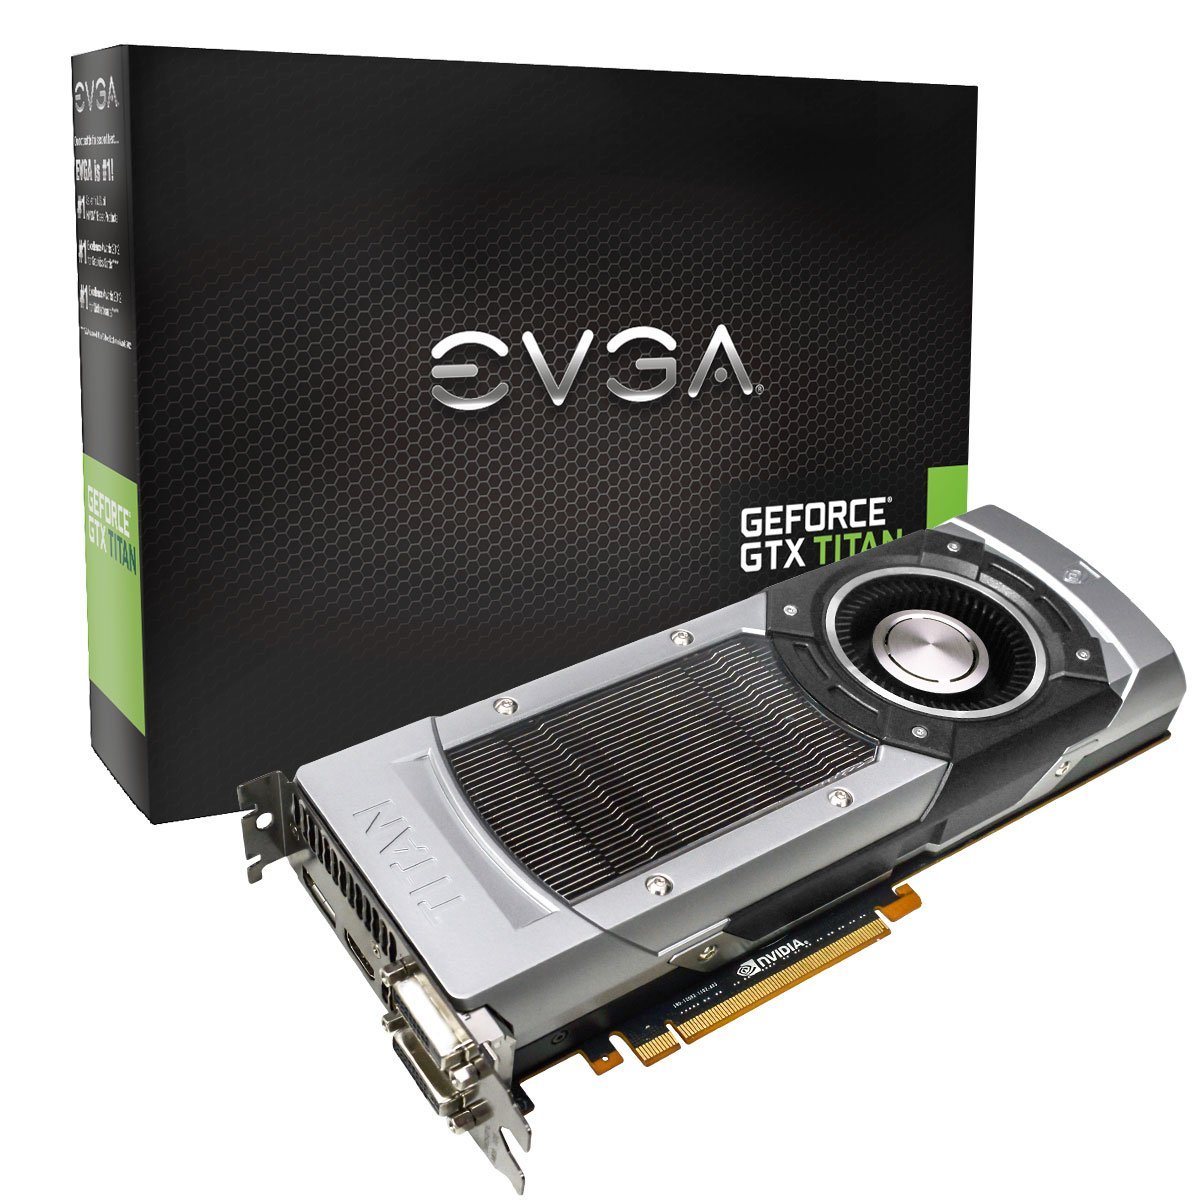 EVGA GeForce GTX TITAN 6GB GDDR5 384bit, Dual-Link DVI-I, DVI-D, HDMI,DP, SLI Ready Graphics Card (06G-P4-2790-KR) Graphics Cards 06G-P4-2790-KR